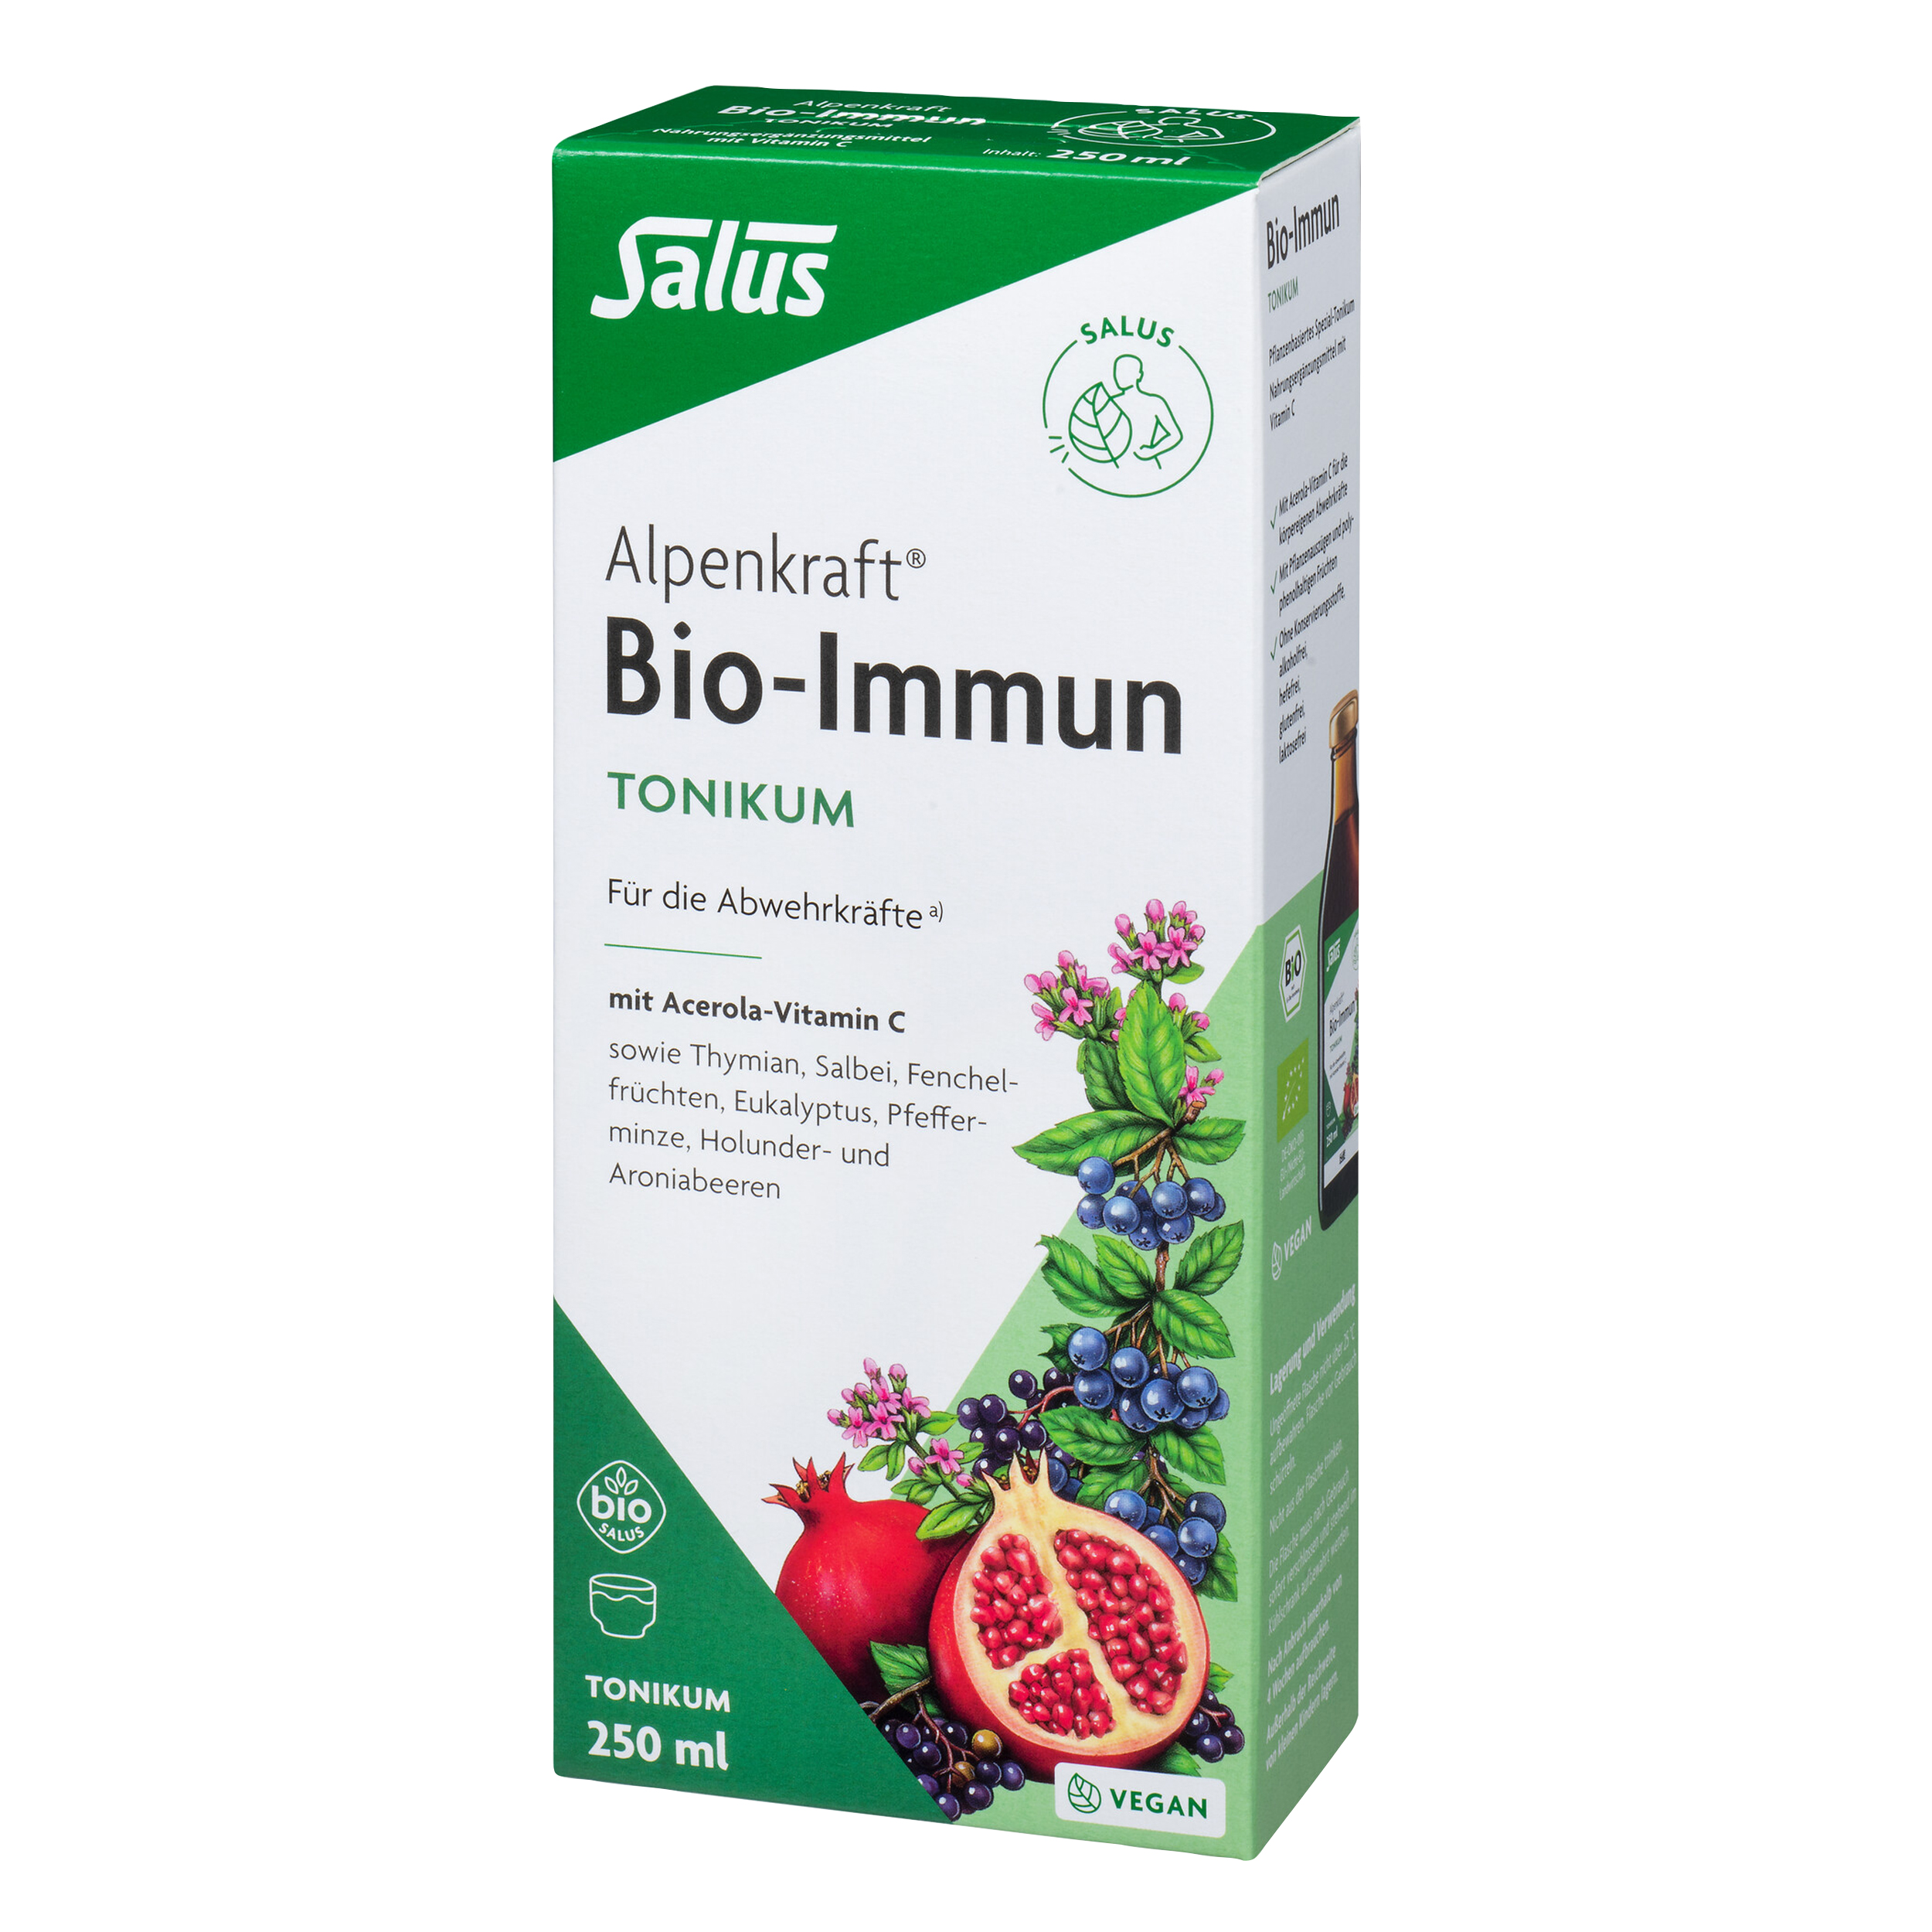 Alpenkraft® Bio-Immun Tonikum